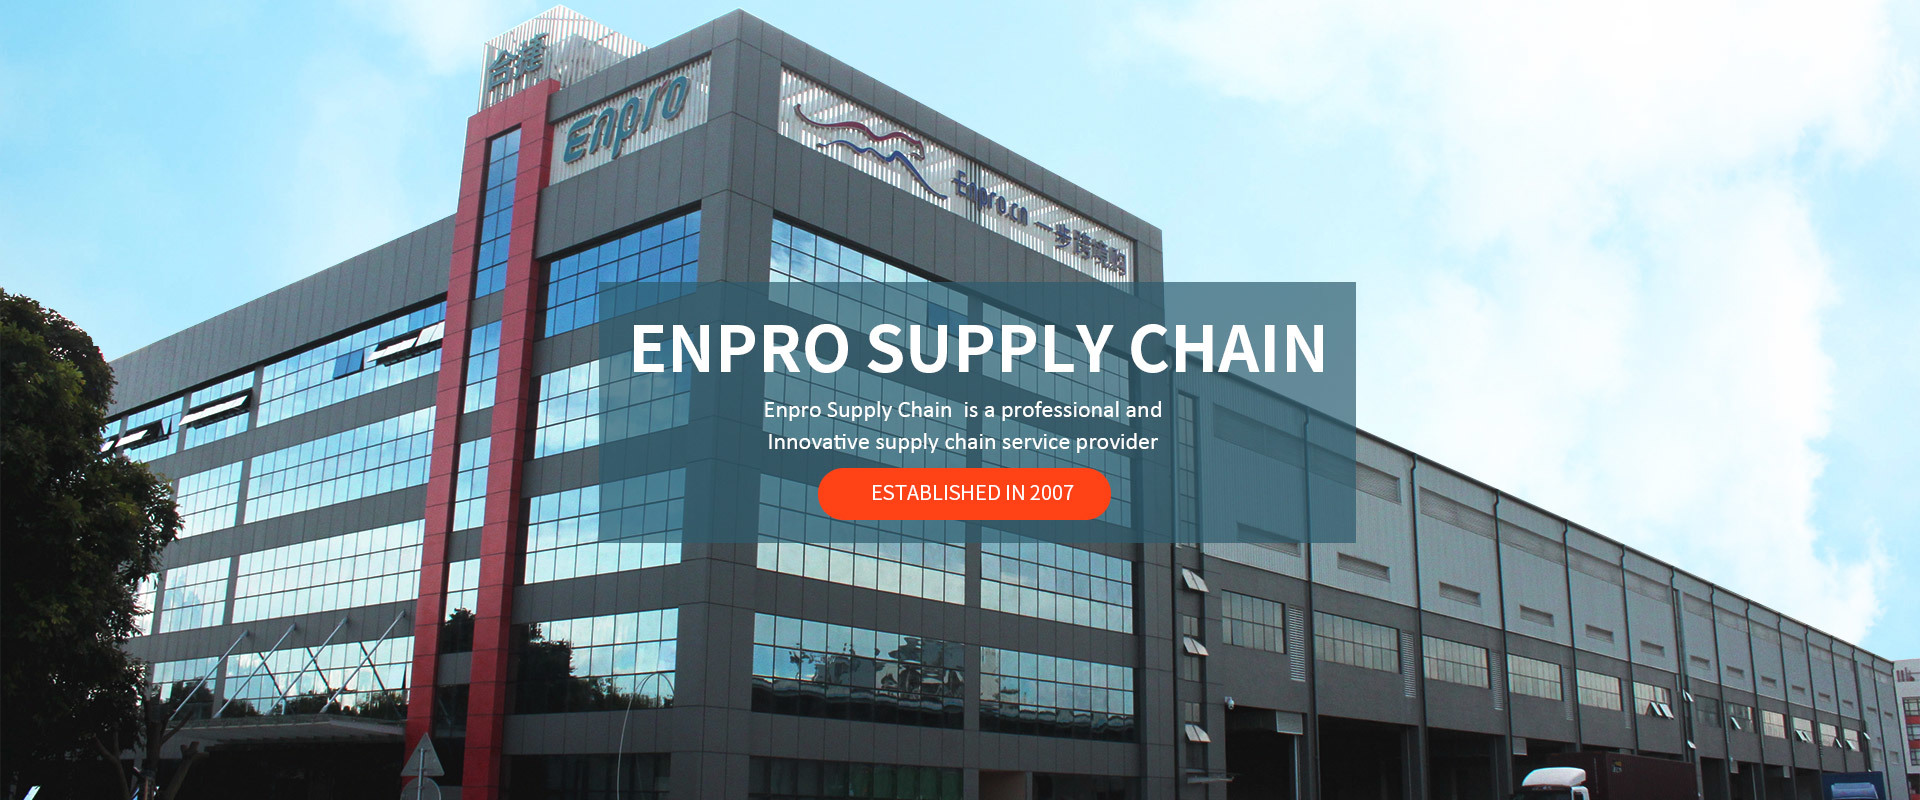 Enpro Supply Chain Management Ltd.